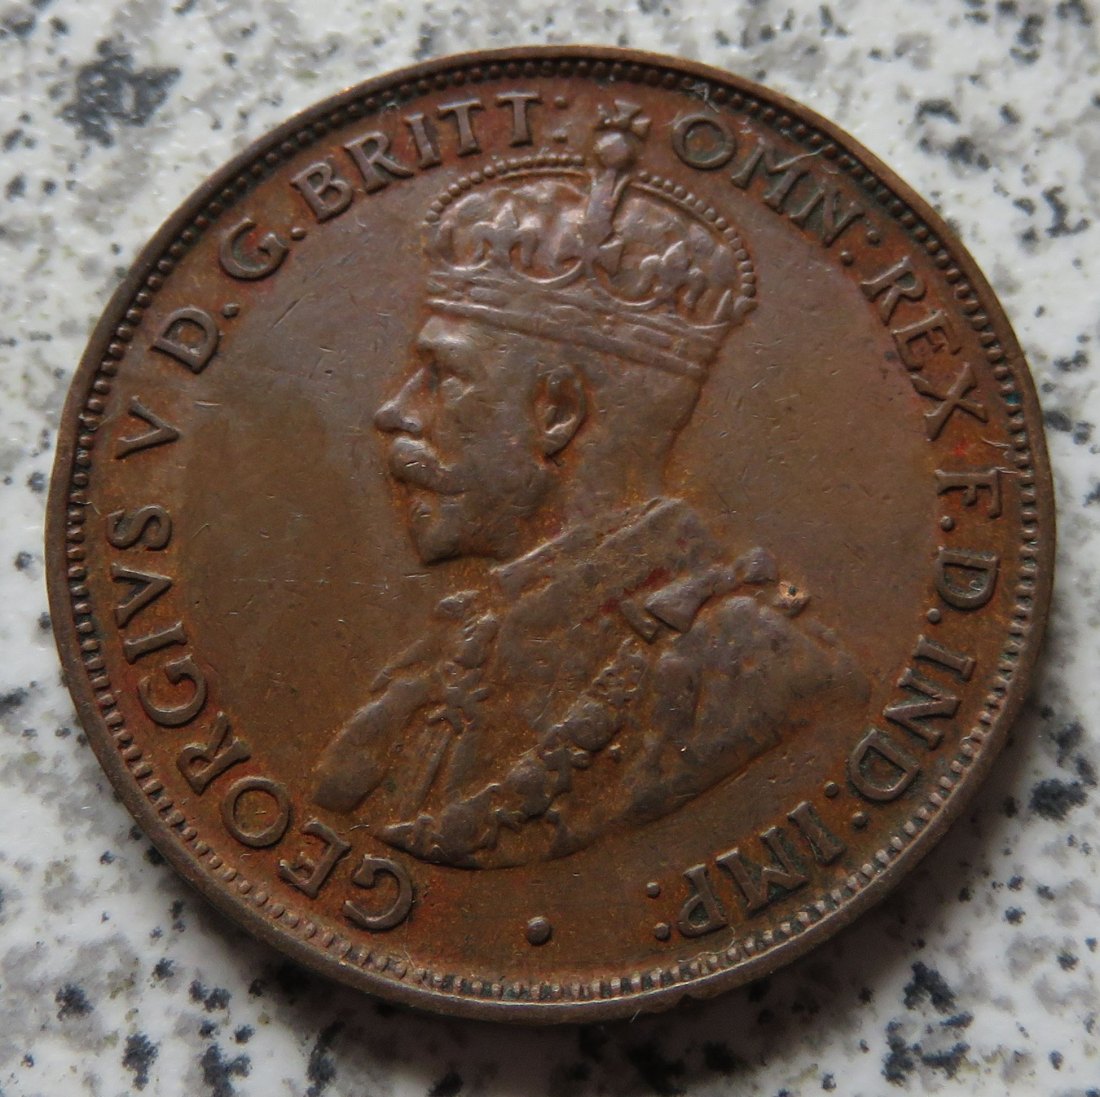  Australien half Penny 1933 (2)   